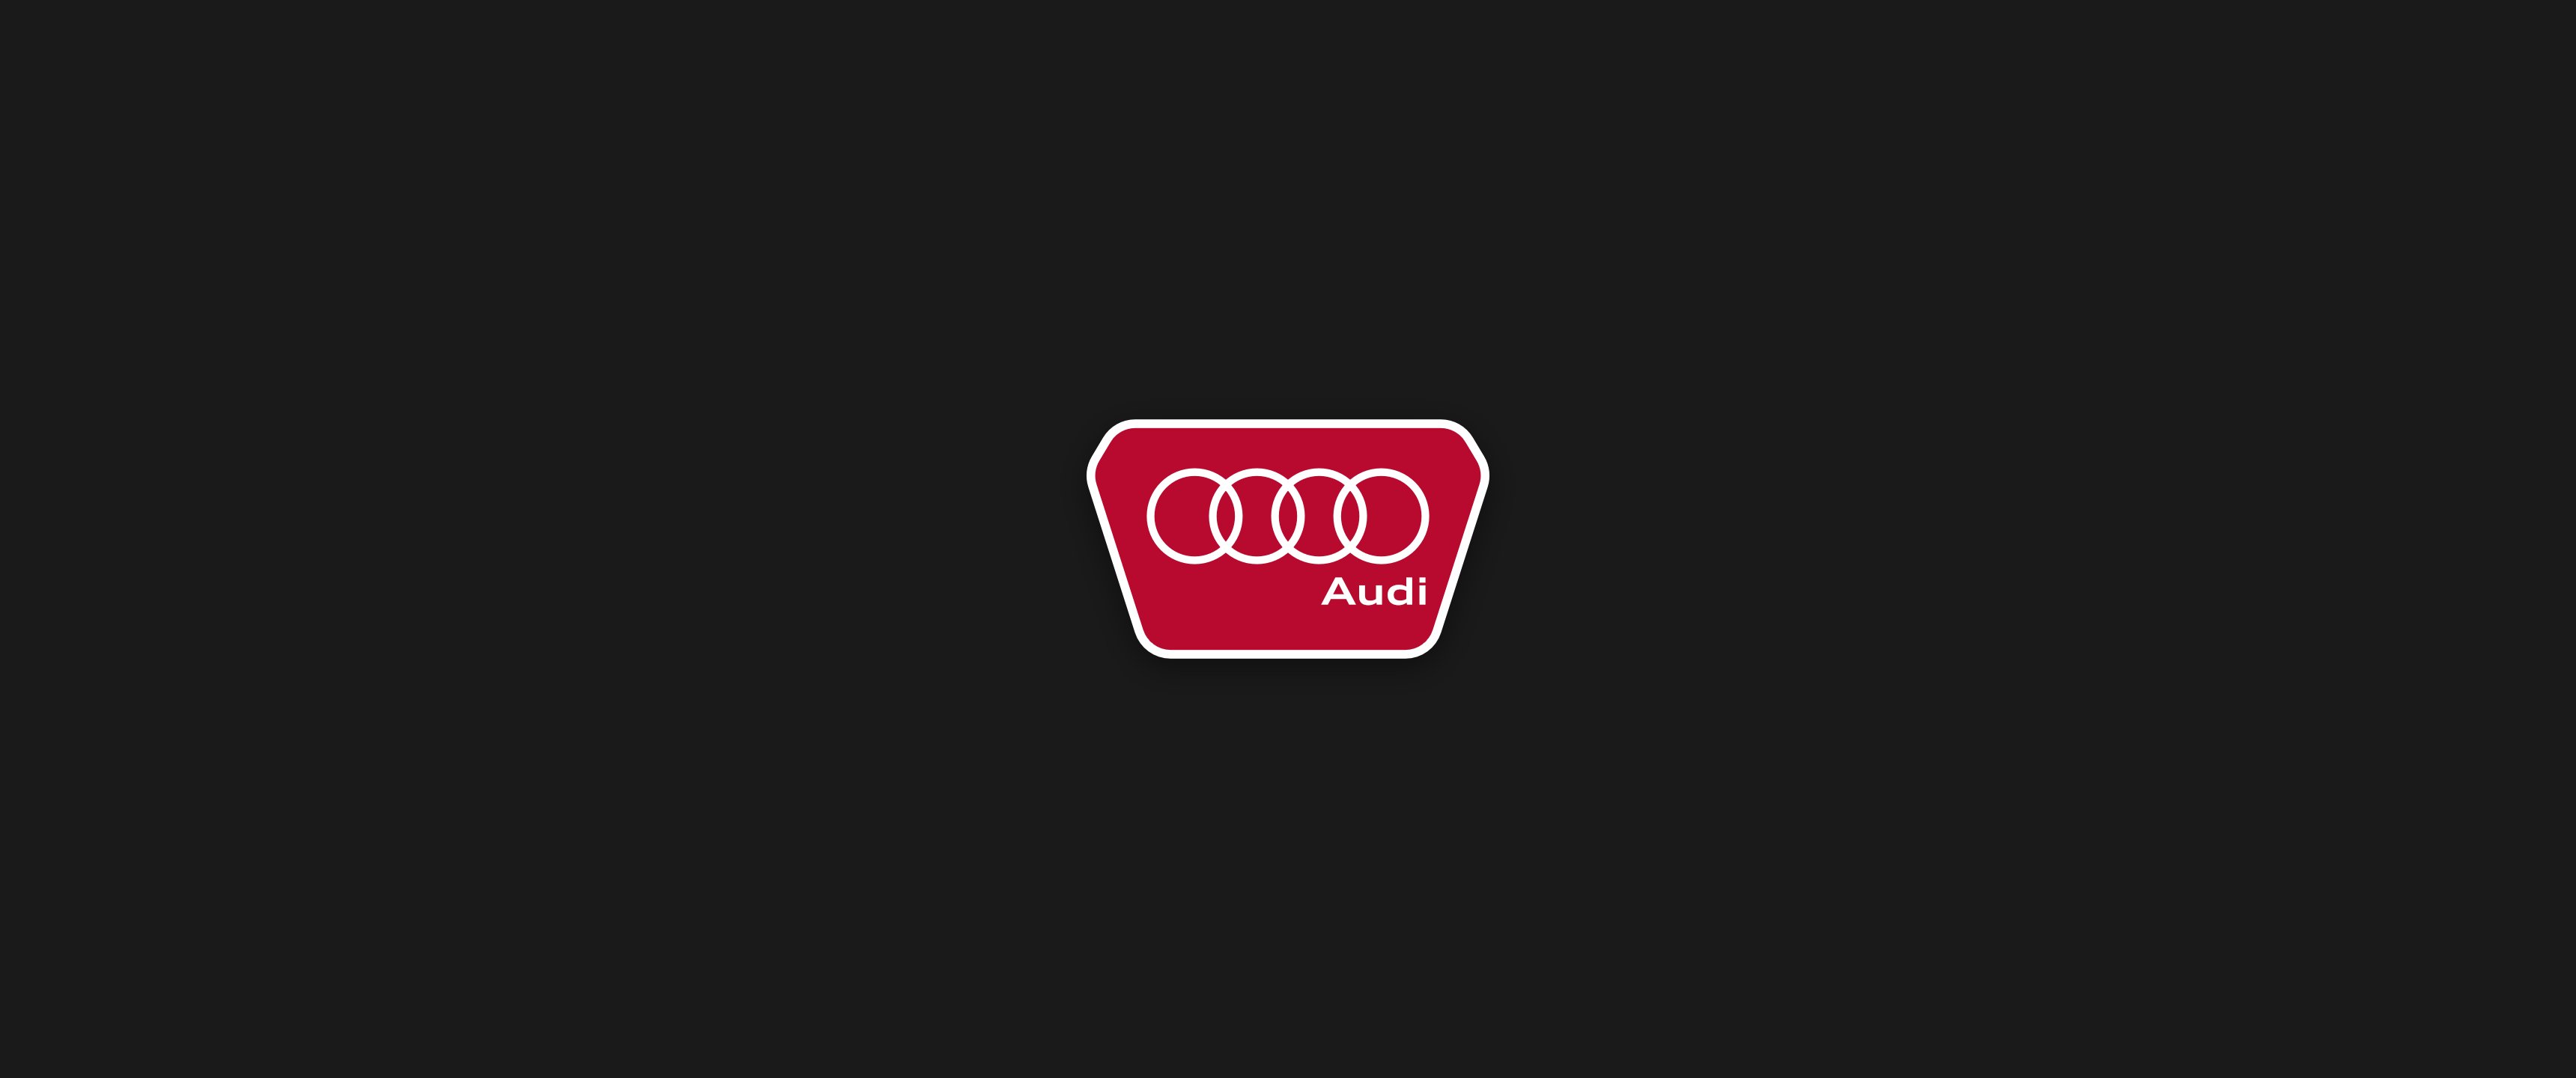 Audi Logo Wallpaper - Sign - HD Wallpaper 